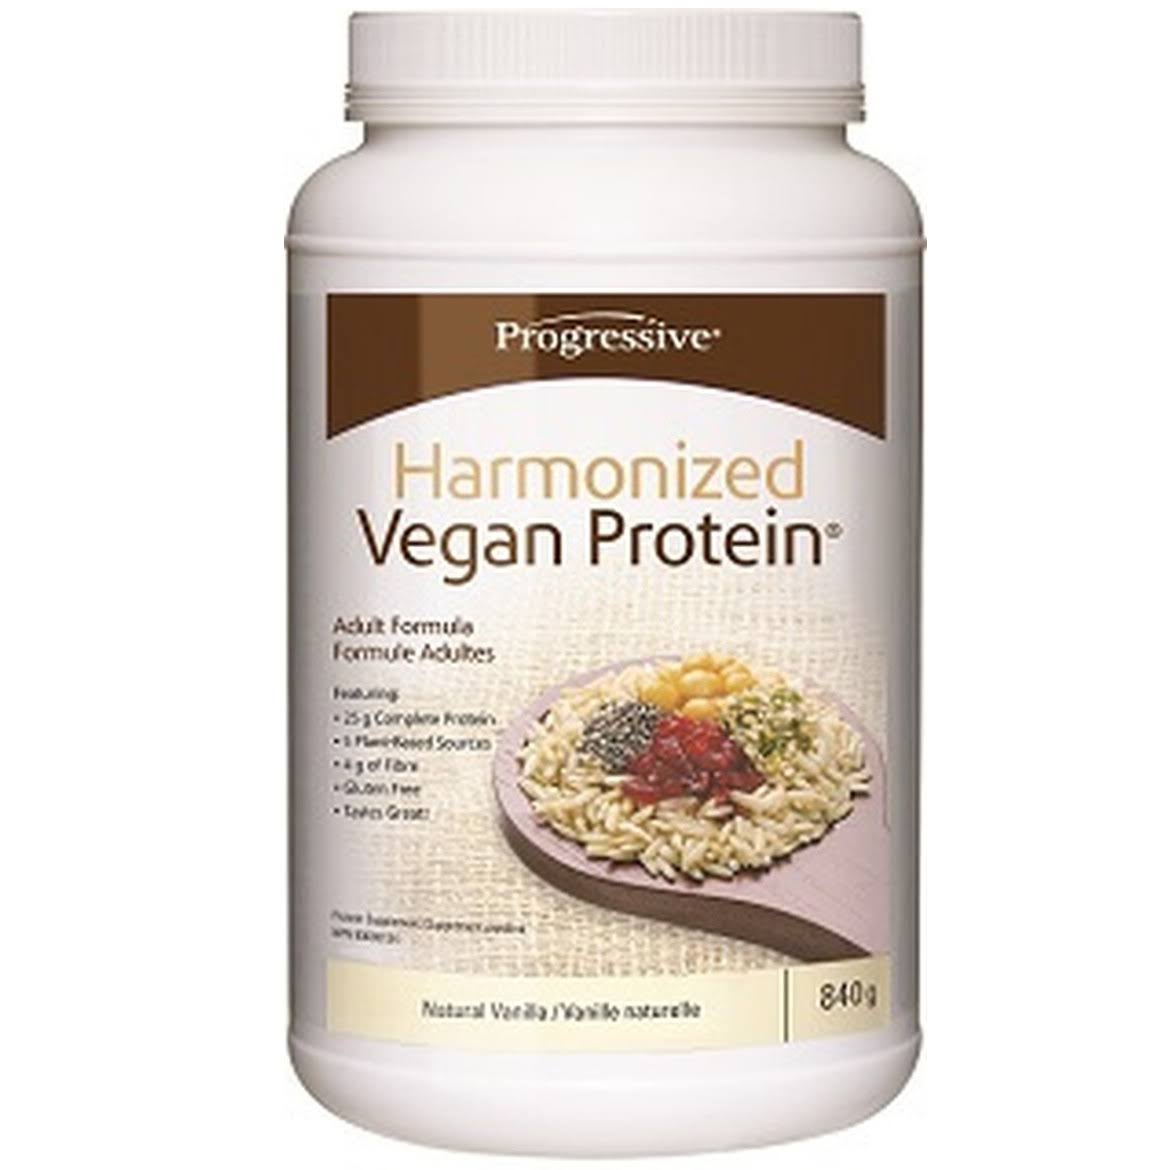 Progressive Harmonized Vegan Protein Supplement - Vanilla, 840g